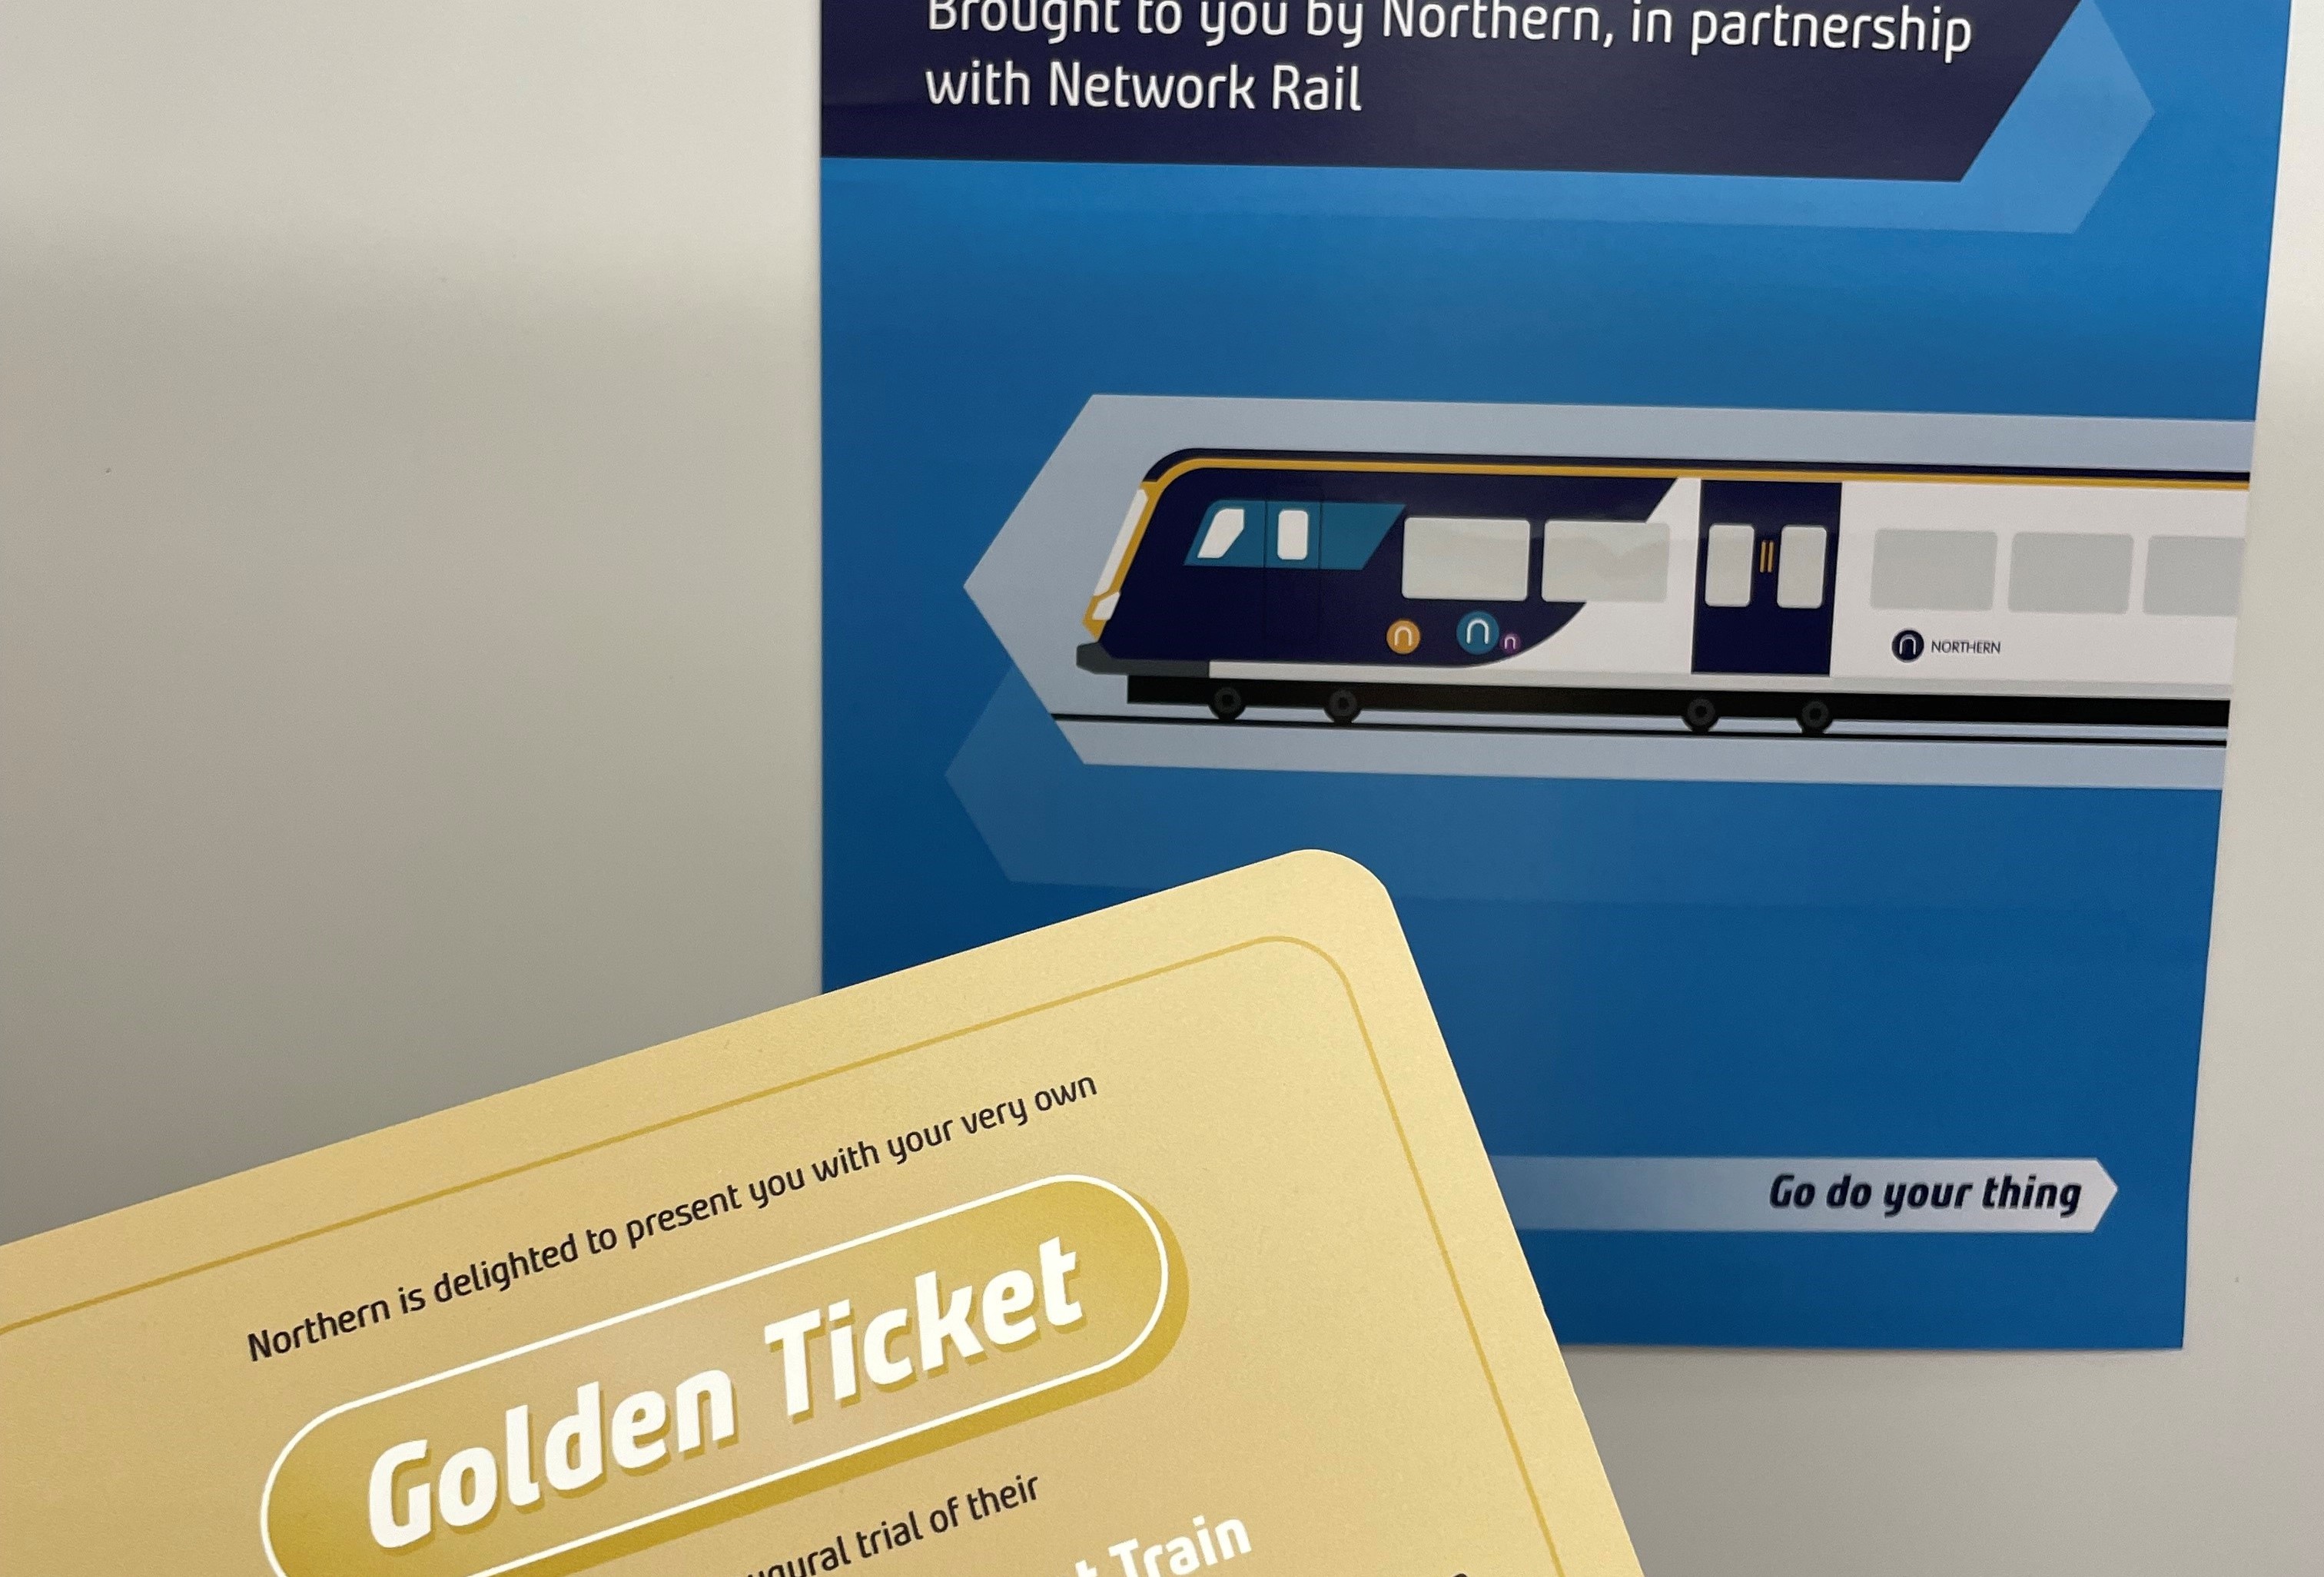 image-shows-northern-s-intelligent-trains-golden-ticket